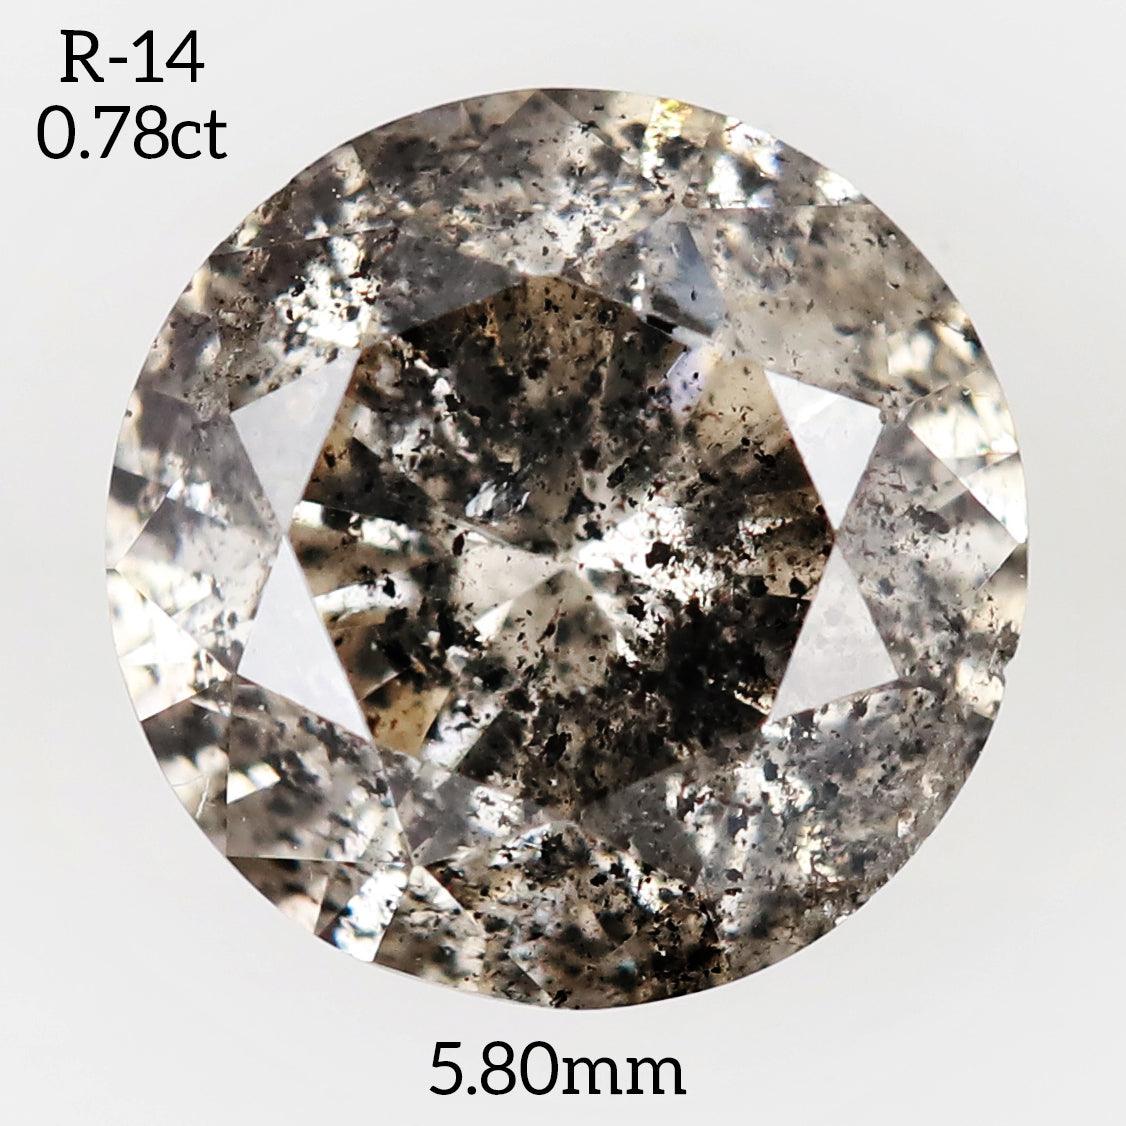 R14 - Salt and pepper round diamond